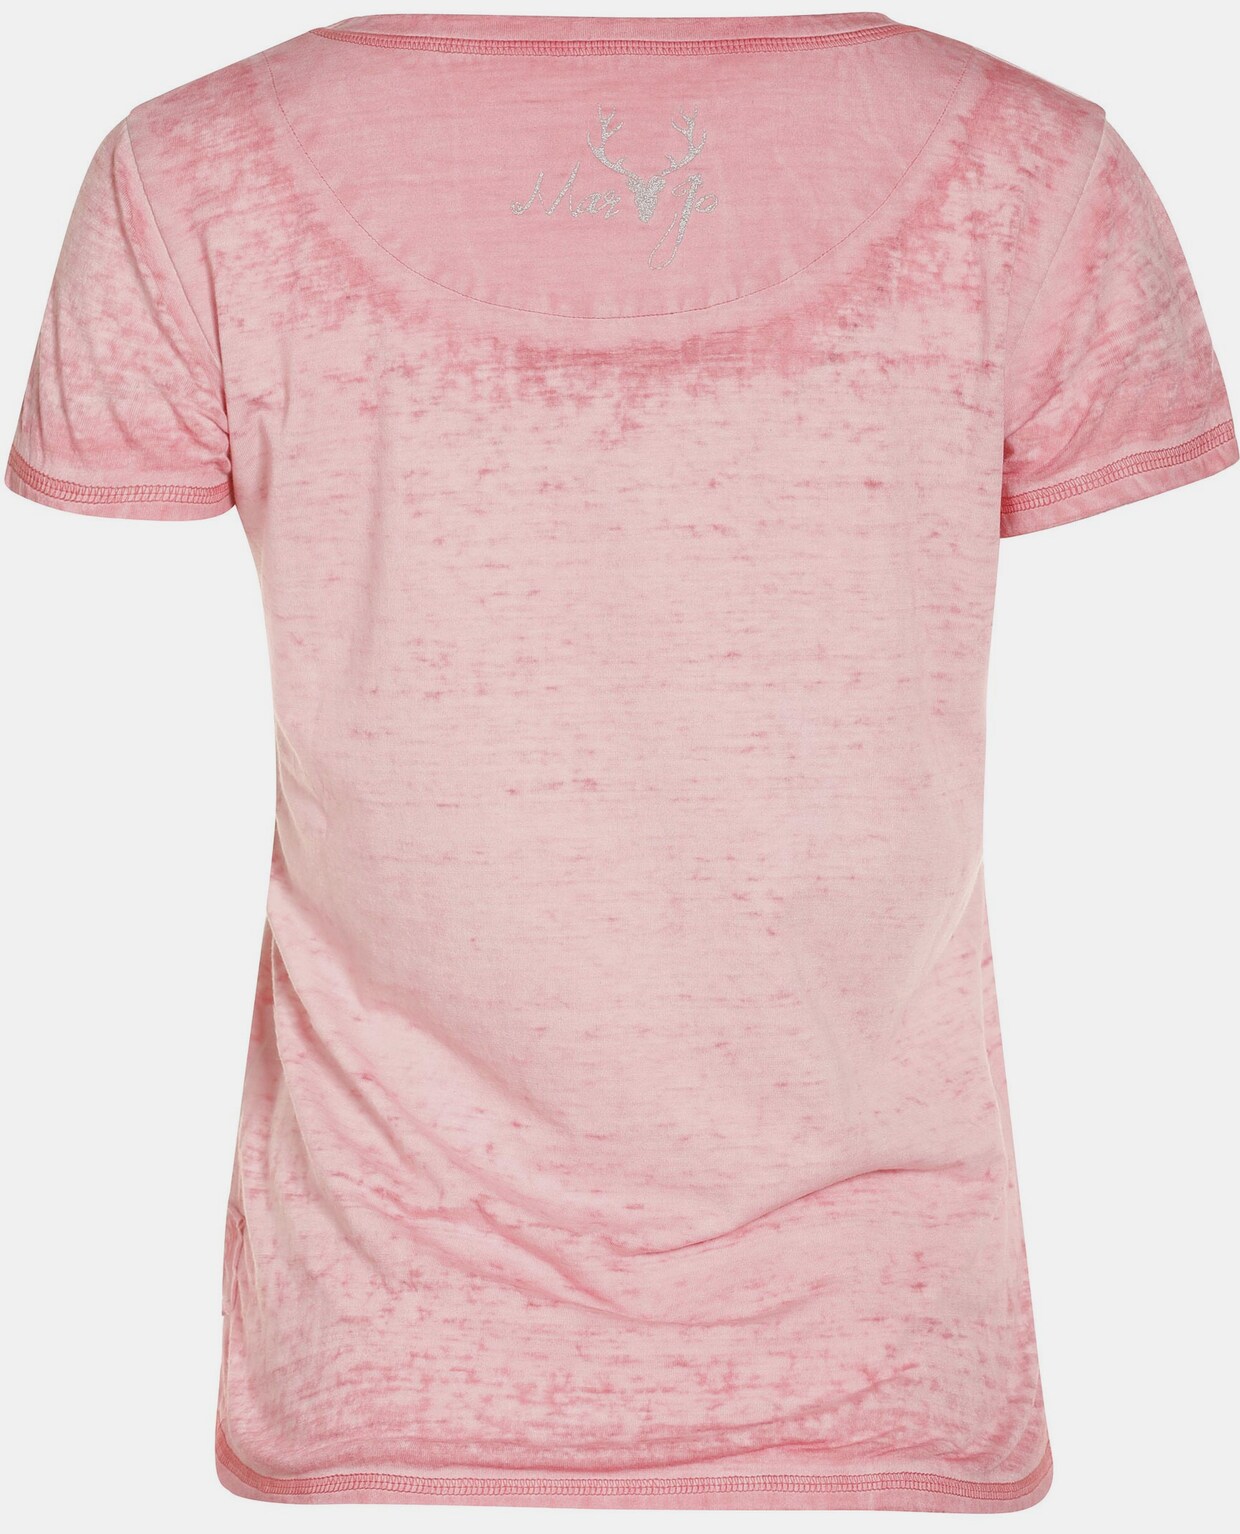 MarJo Trachtenshirt - pink